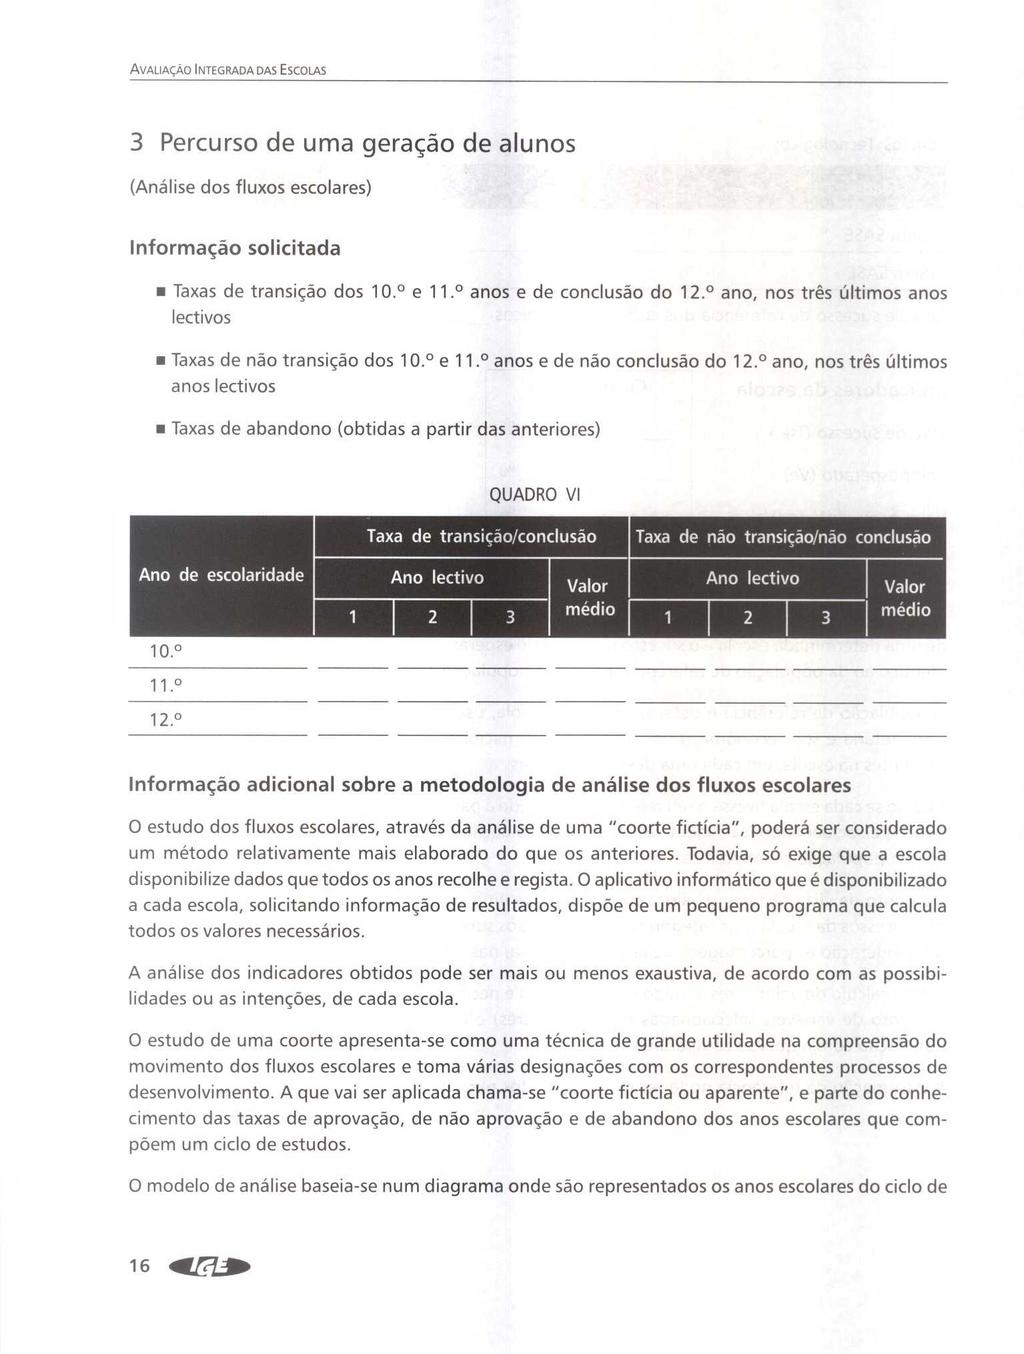 VLIO INTEGR S EscoLs 3 Percurso de uma geracao de aluos (alise dos fluxos escolares) Iformacao solicitada Taxas de trasi45o dos 10.0 e 11. aos e de coclusao do 12.